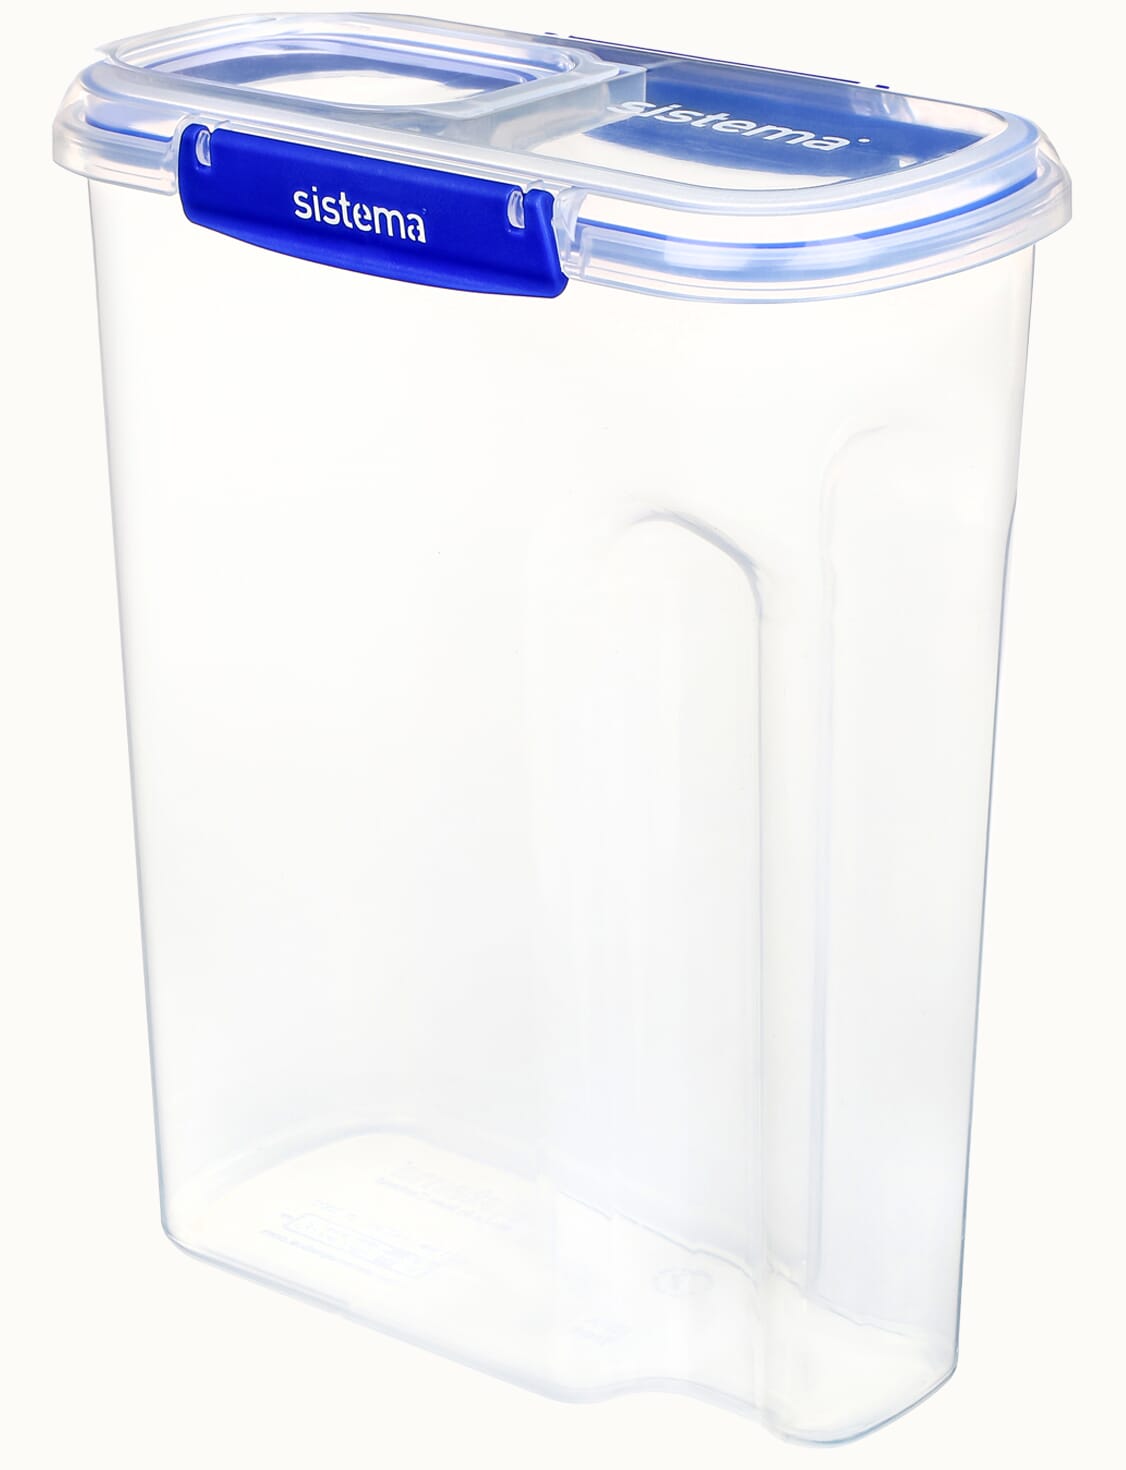 Sistema Klip It Cereal Container 142 Oz Clear / Aqua 17.75 Cups Cereal  Storage